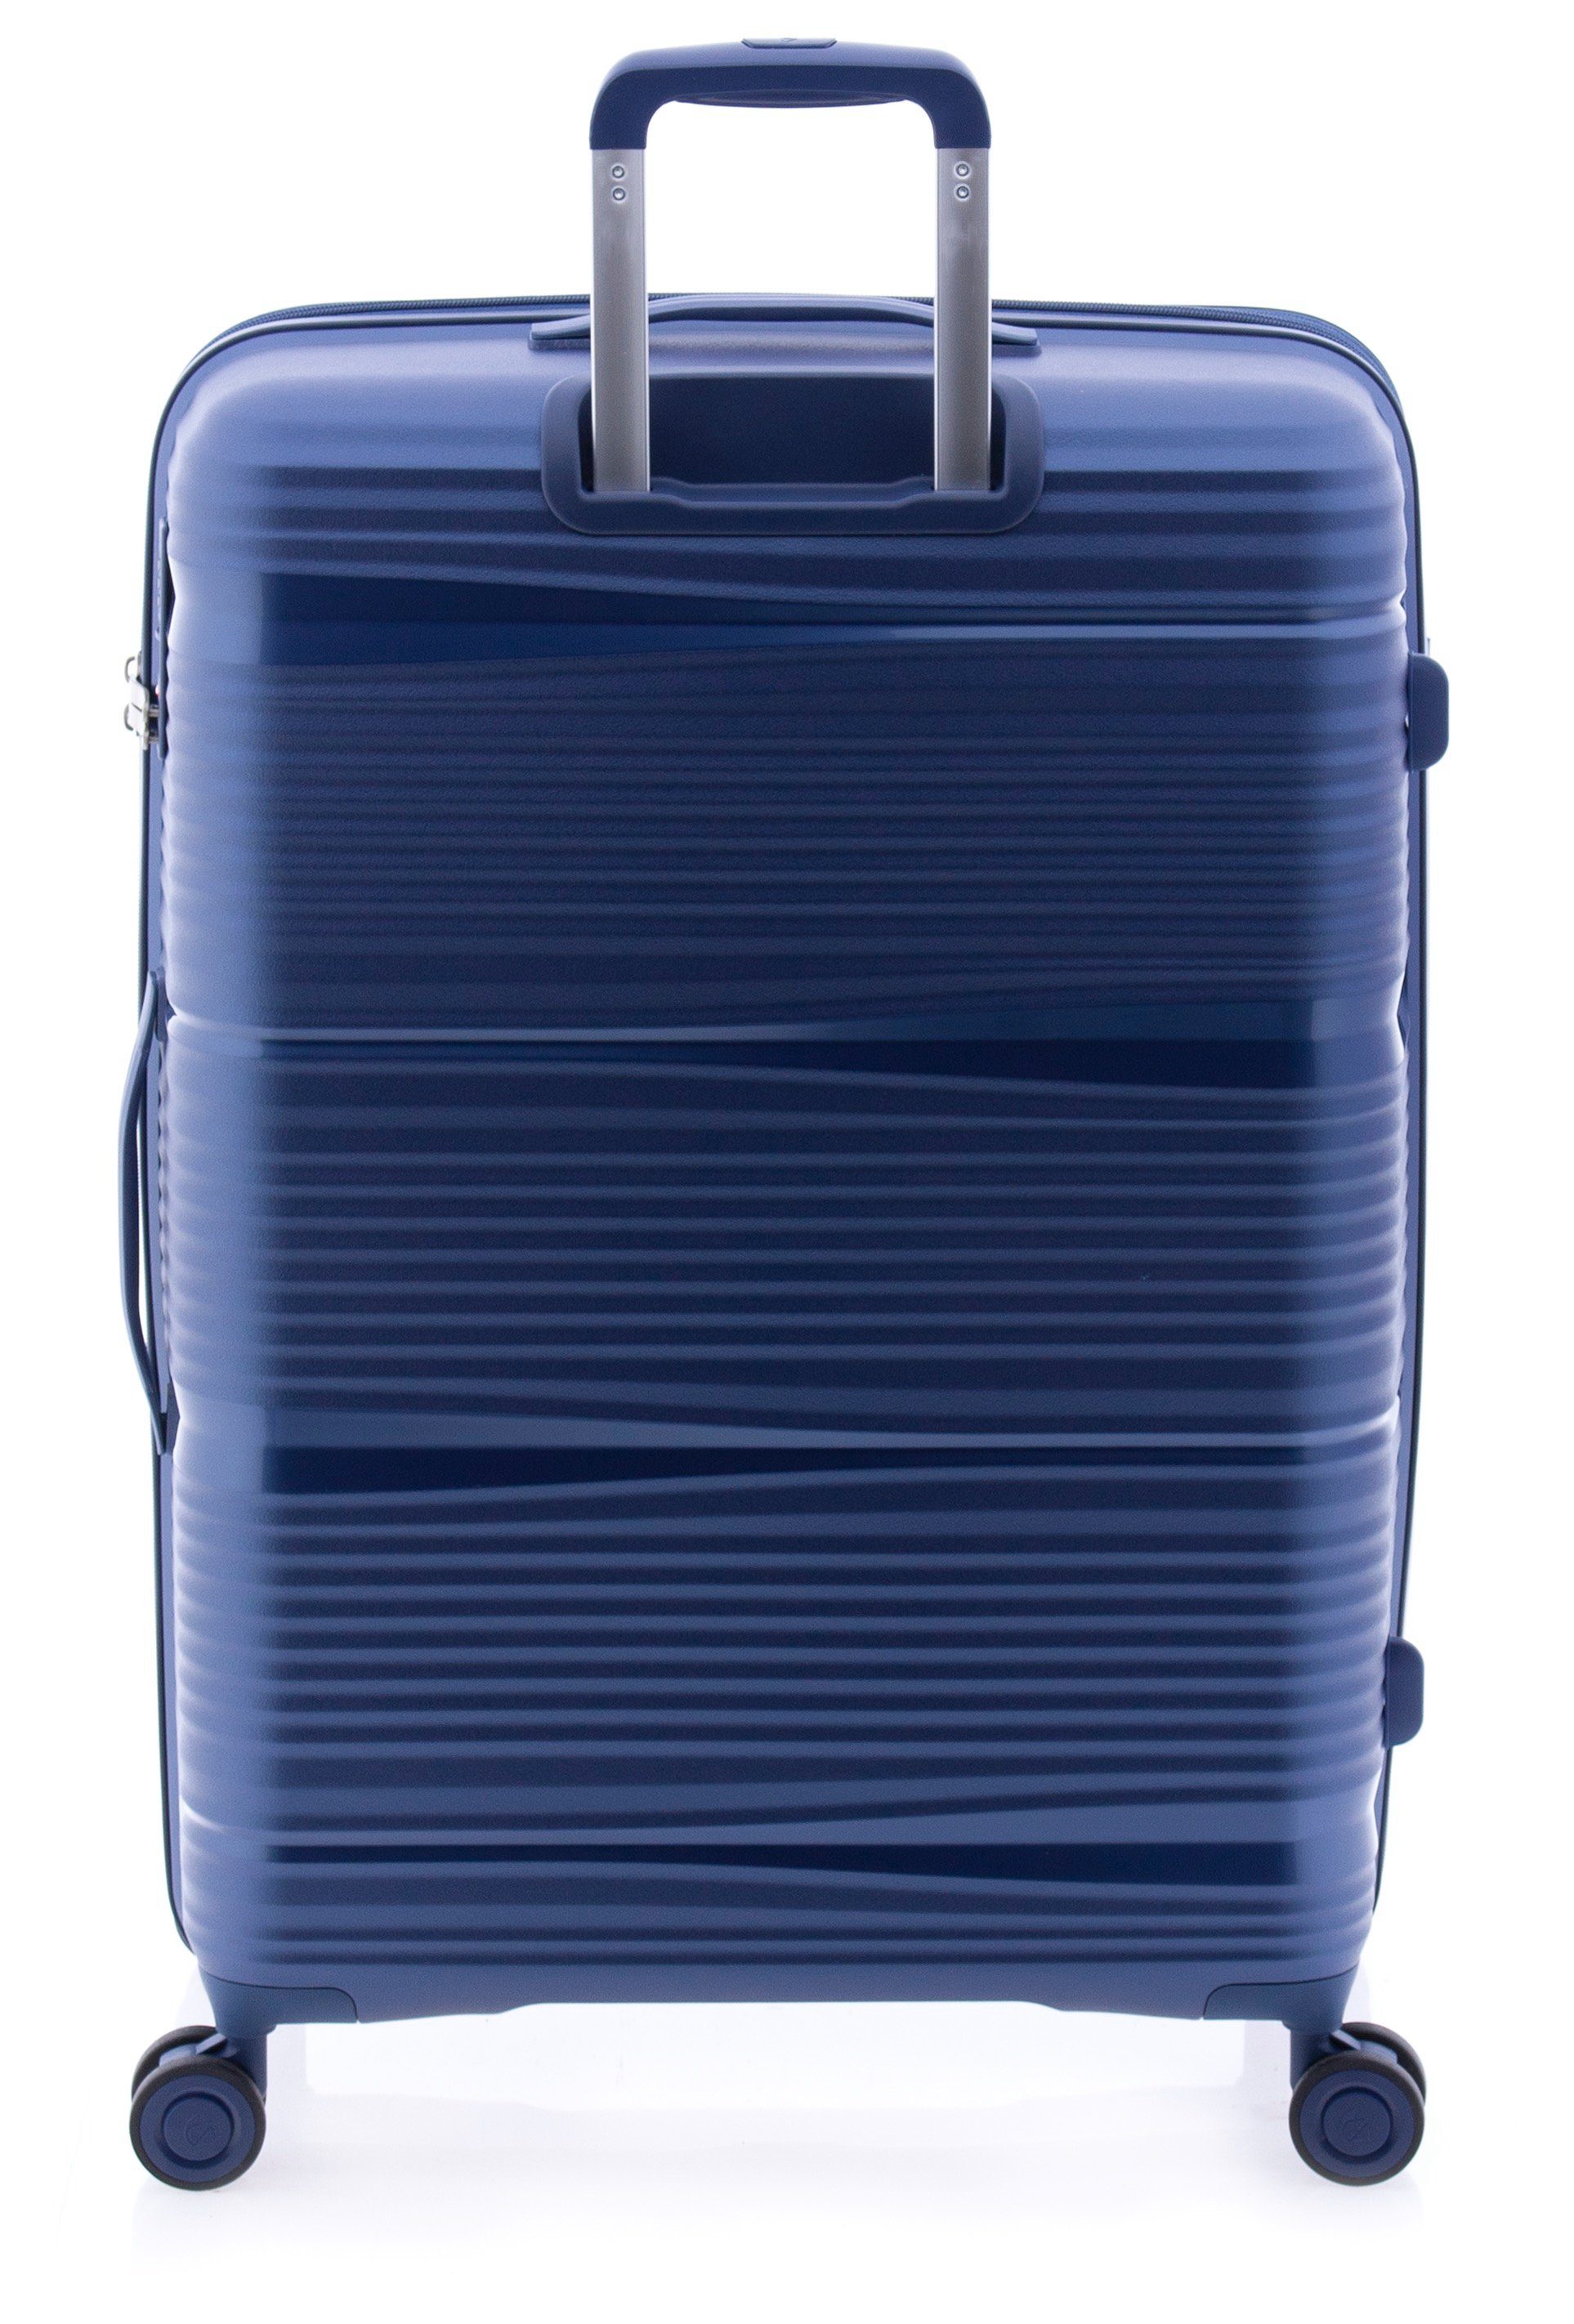 GLADIATOR Hartschalen-Trolley od TSA-Schloss, blau, - 76 Rollen, beige Dehnfalte, Polypropylen, schwarz, grün XL Koffer cm, 4